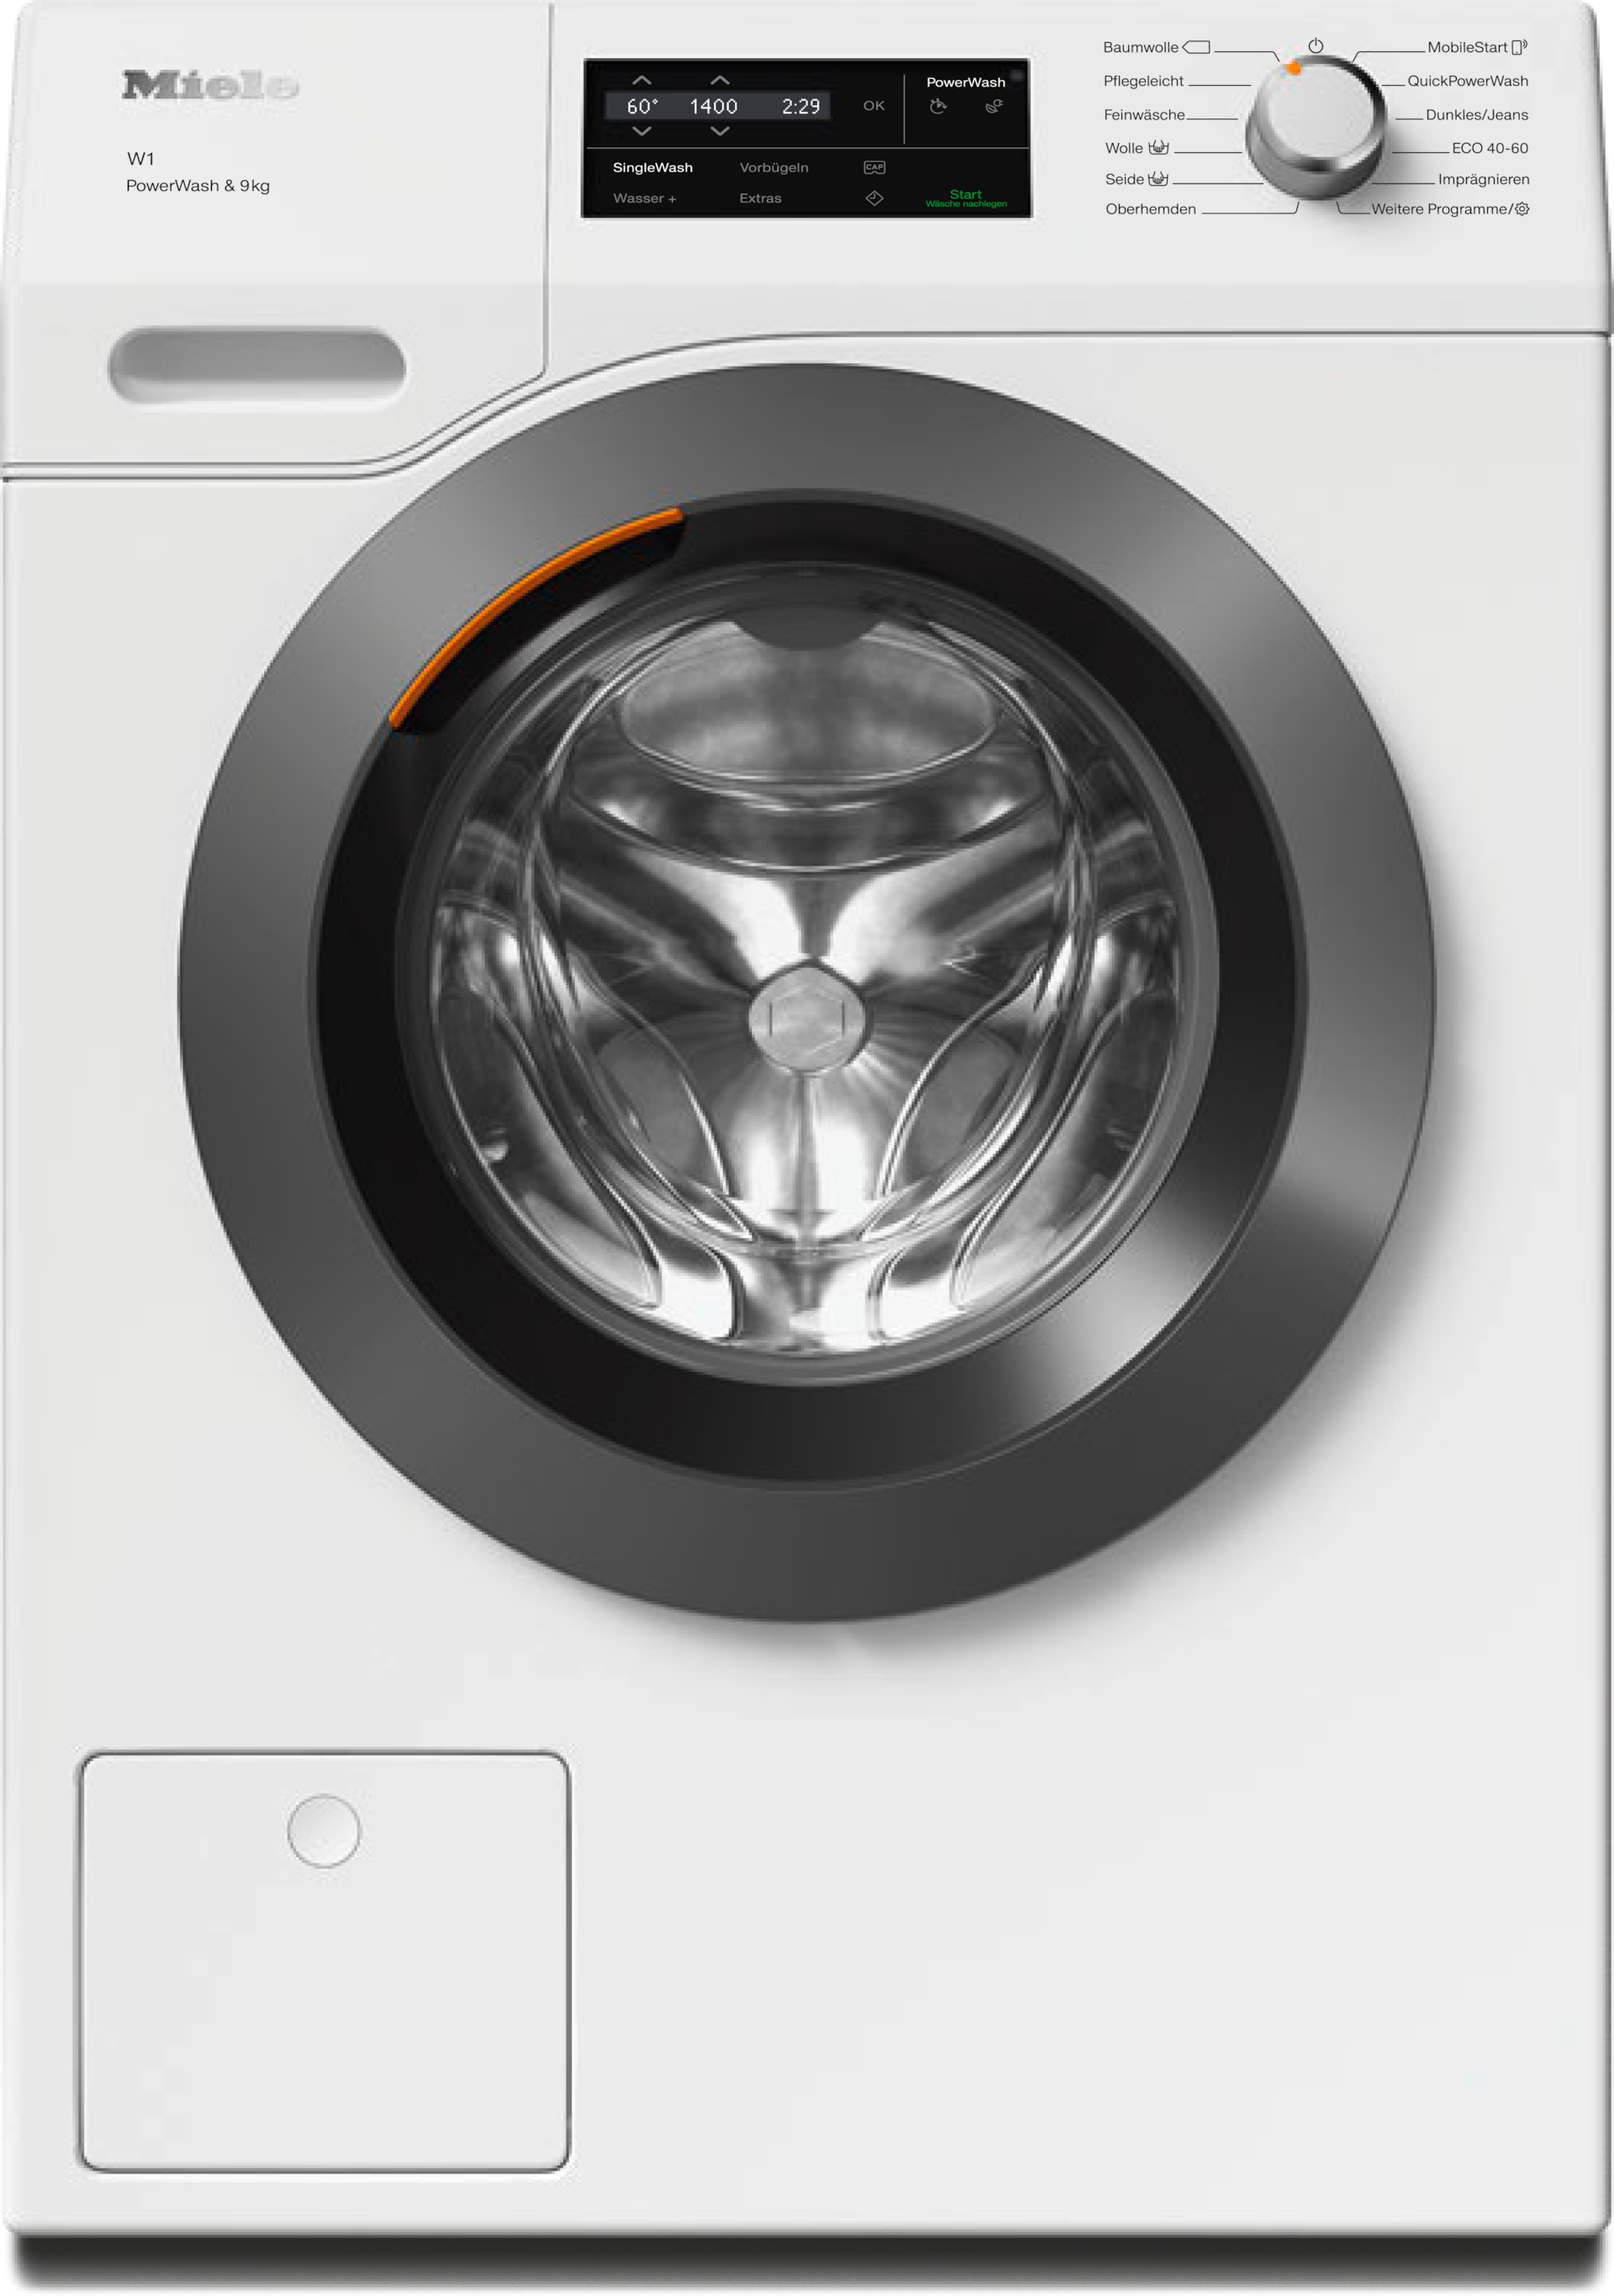 Washing machines - WCG370 WPS PWash&9kg Lopoč bijela - 1